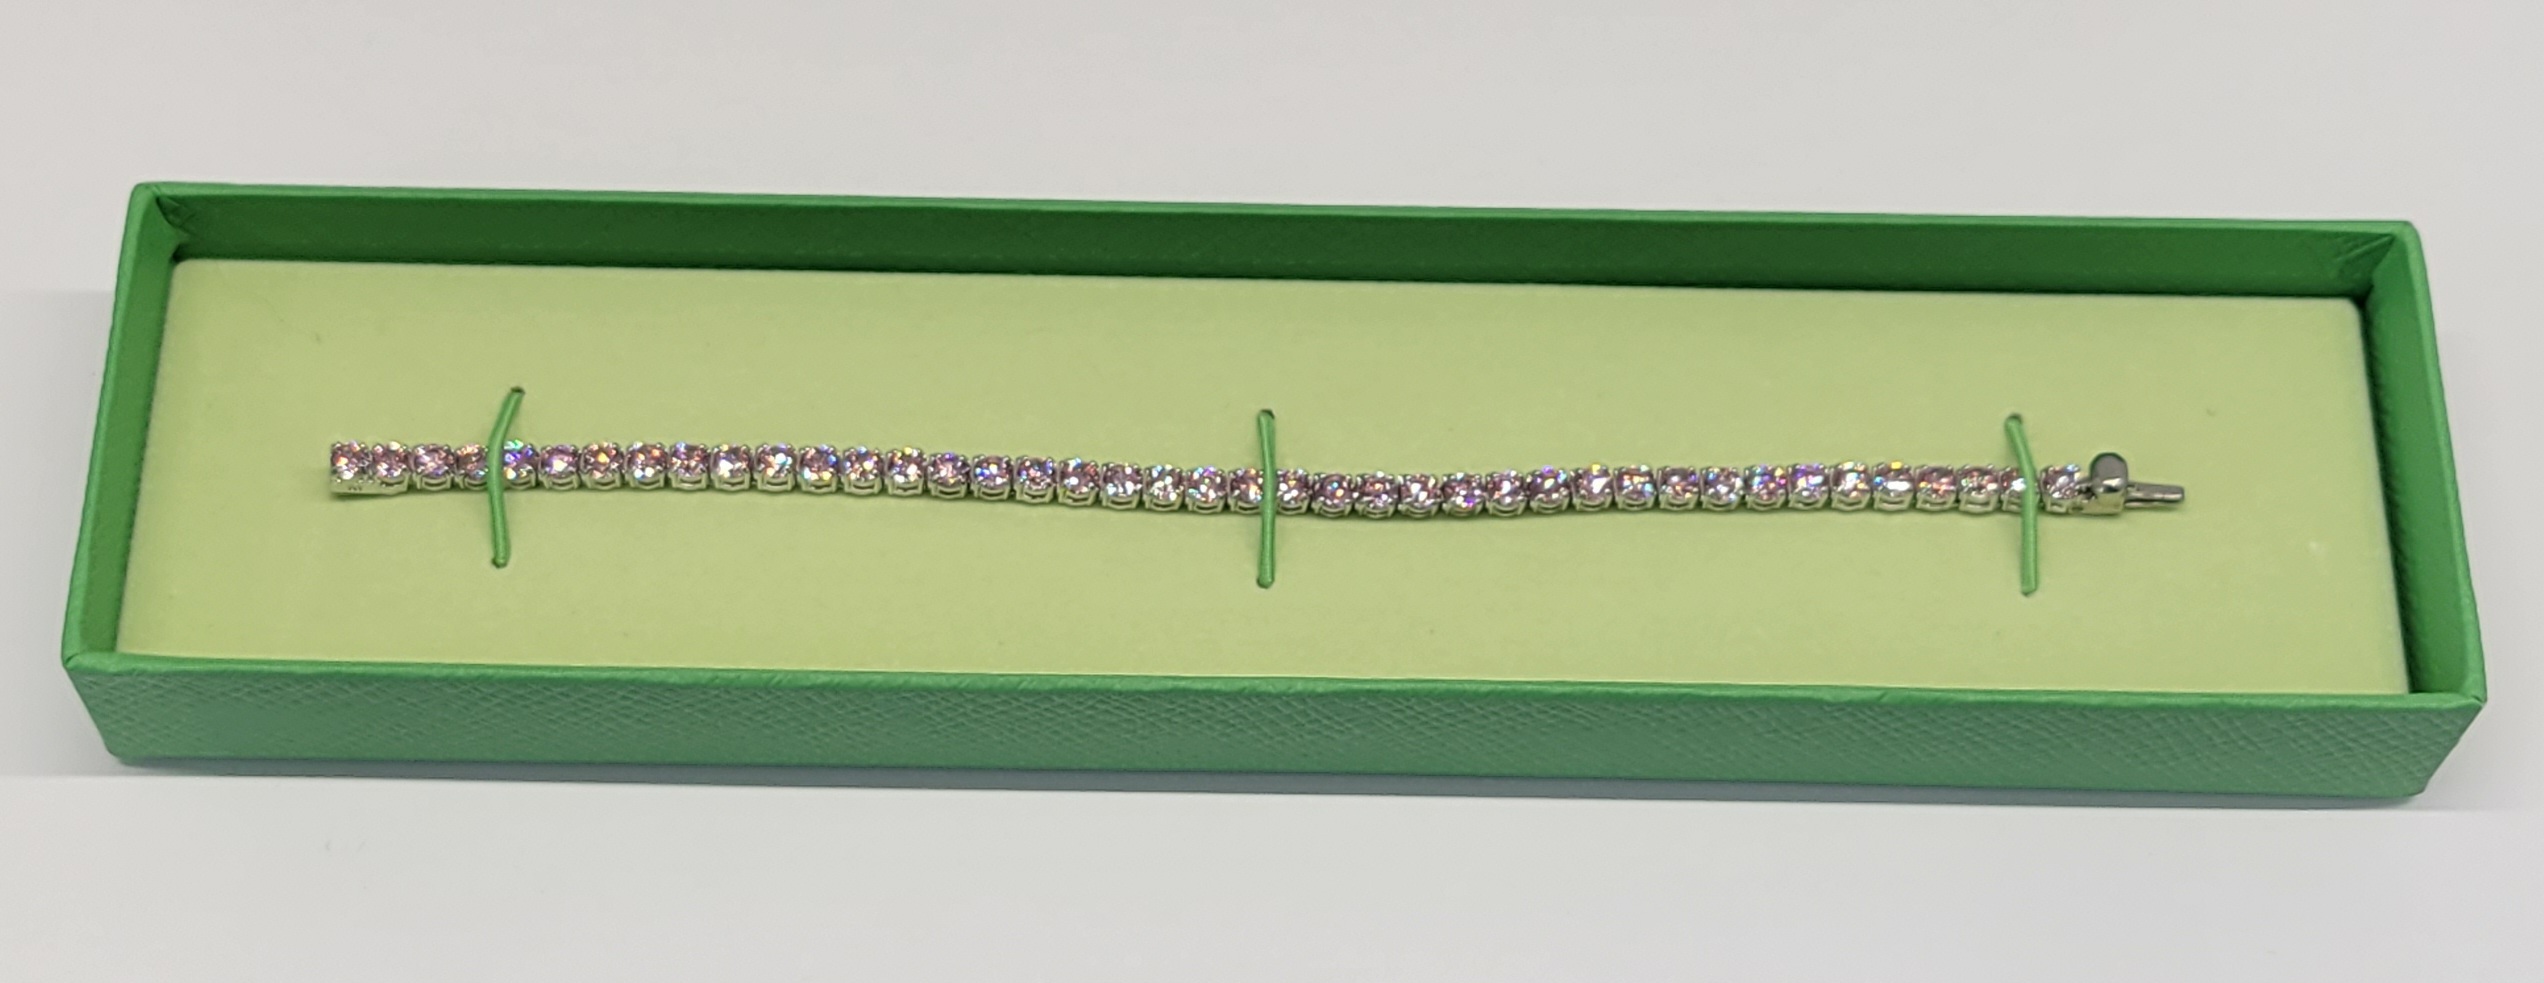 Swarovski Matrix Tennis Bracelet Round Cut Small Pink Rhodium Plated 